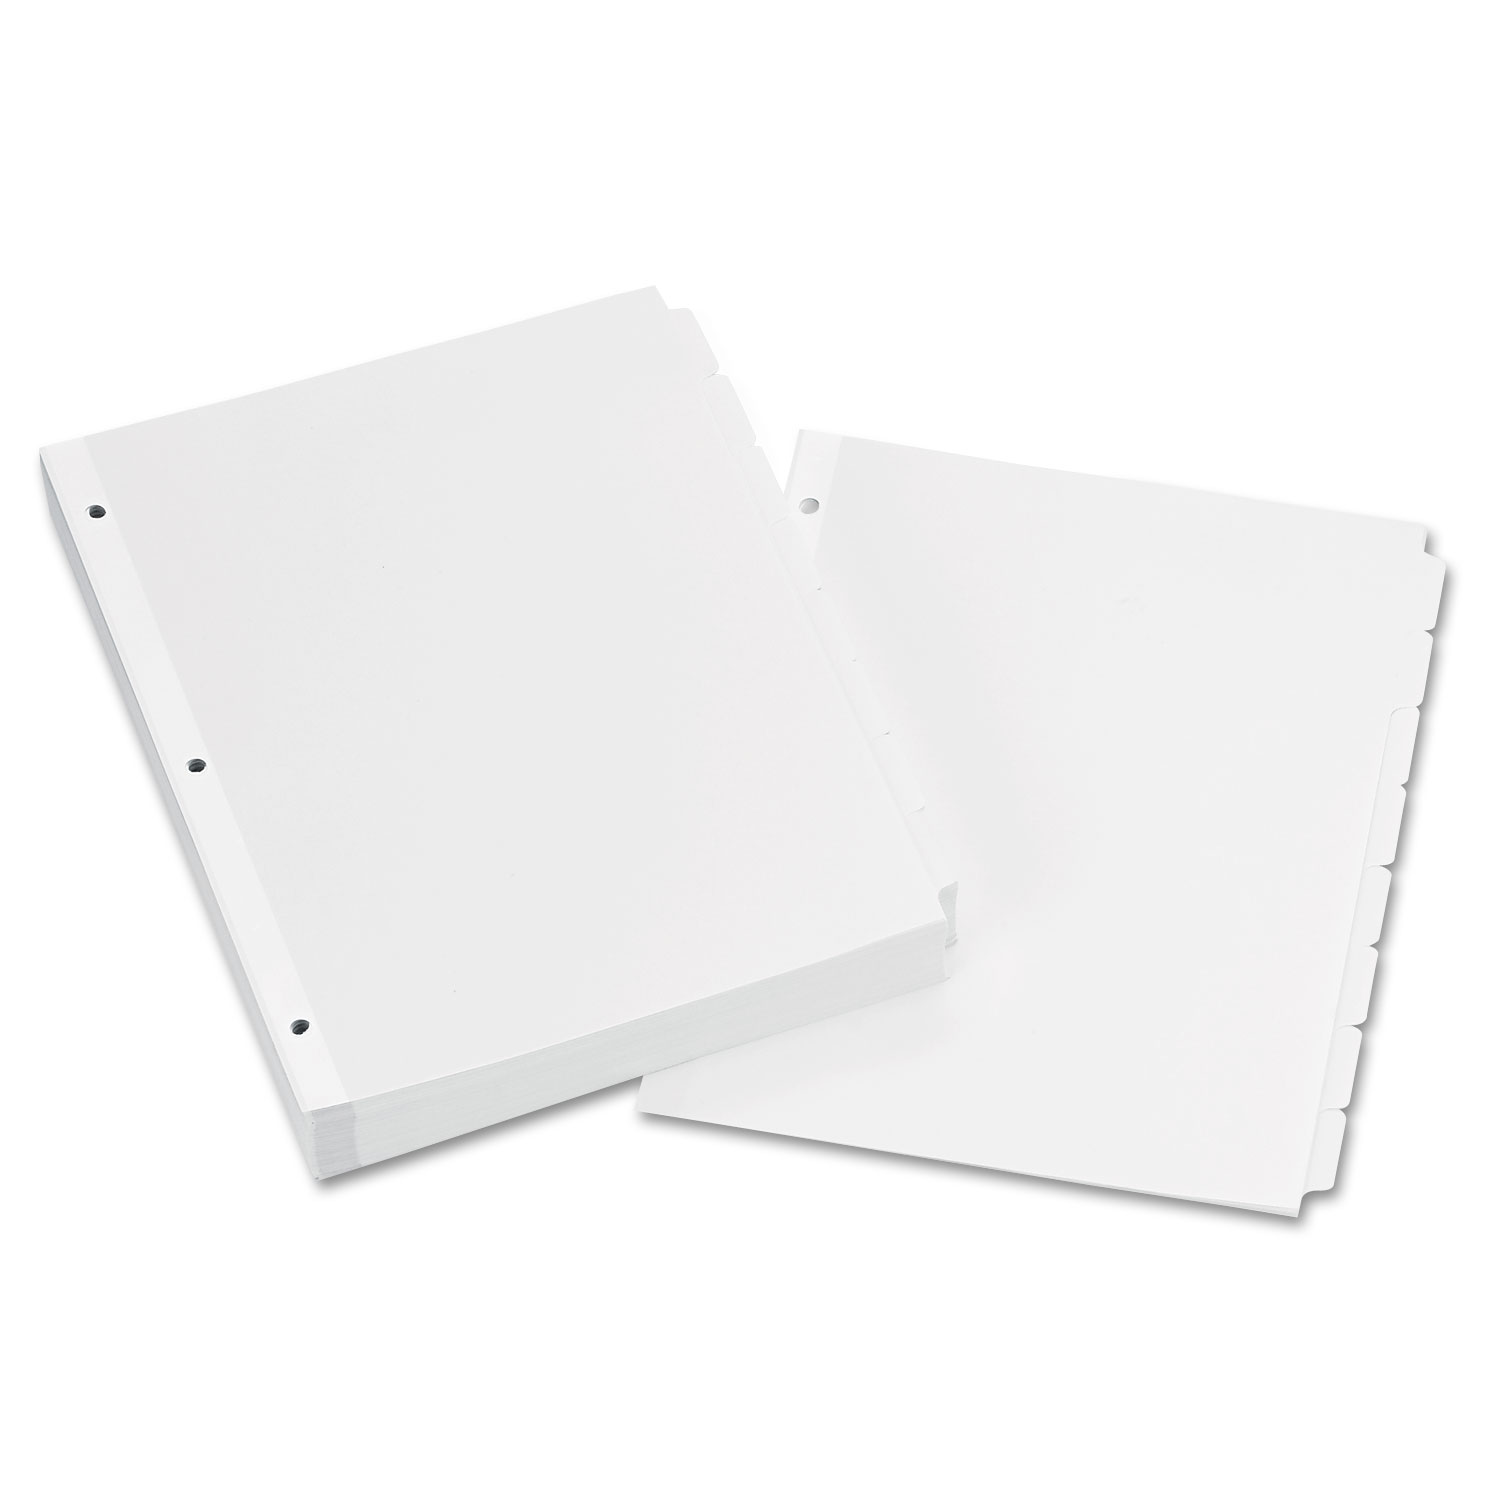  Avery 11507 Write & Erase Plain-Tab Paper Dividers, 8-Tab, Letter, White, 24 Sets (AVE11507) 